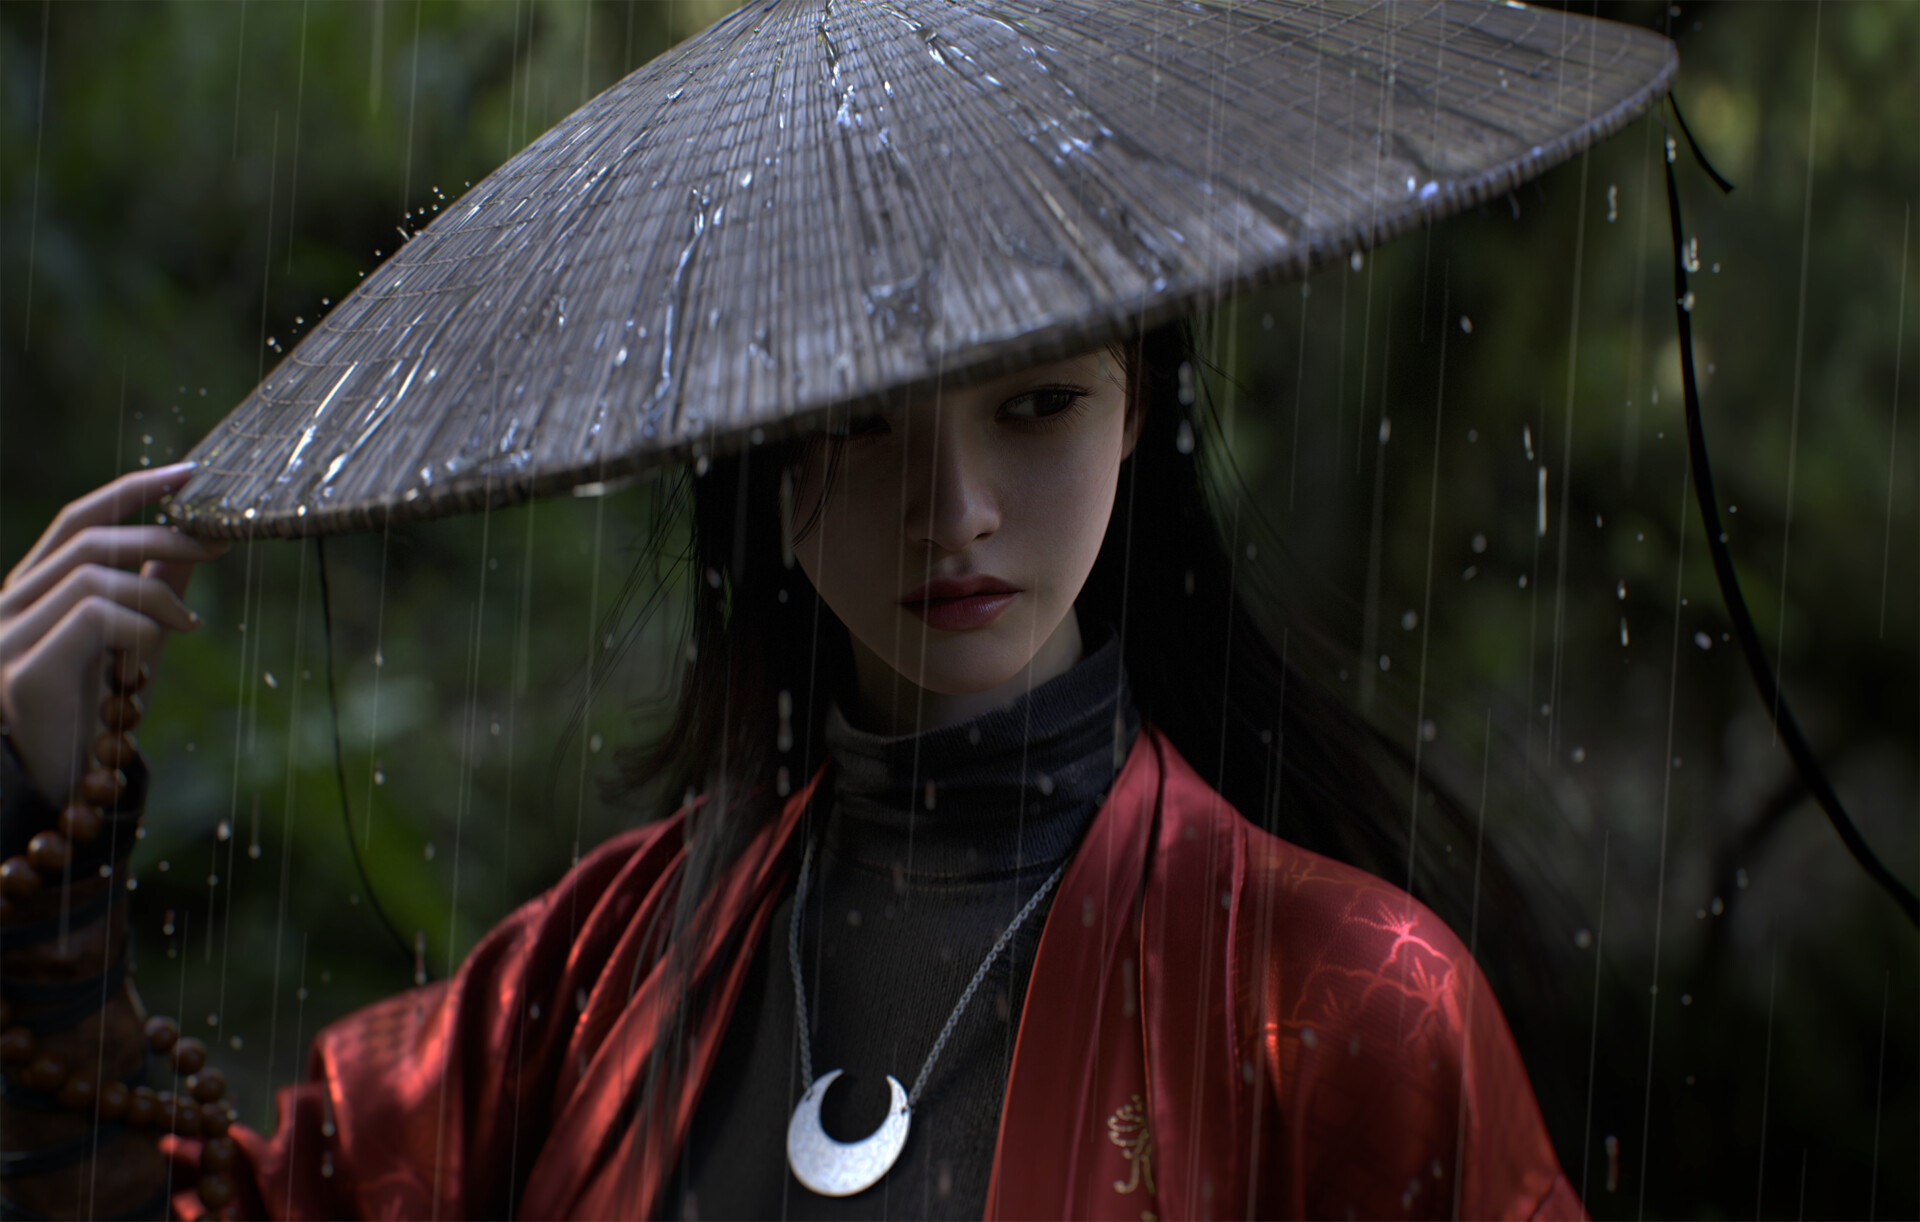 General 1920x1222 Kim Yeong Gyu CGI women samurai hat necklace rain digital art looking away looking sideways blurred blurry background long hair red clothing